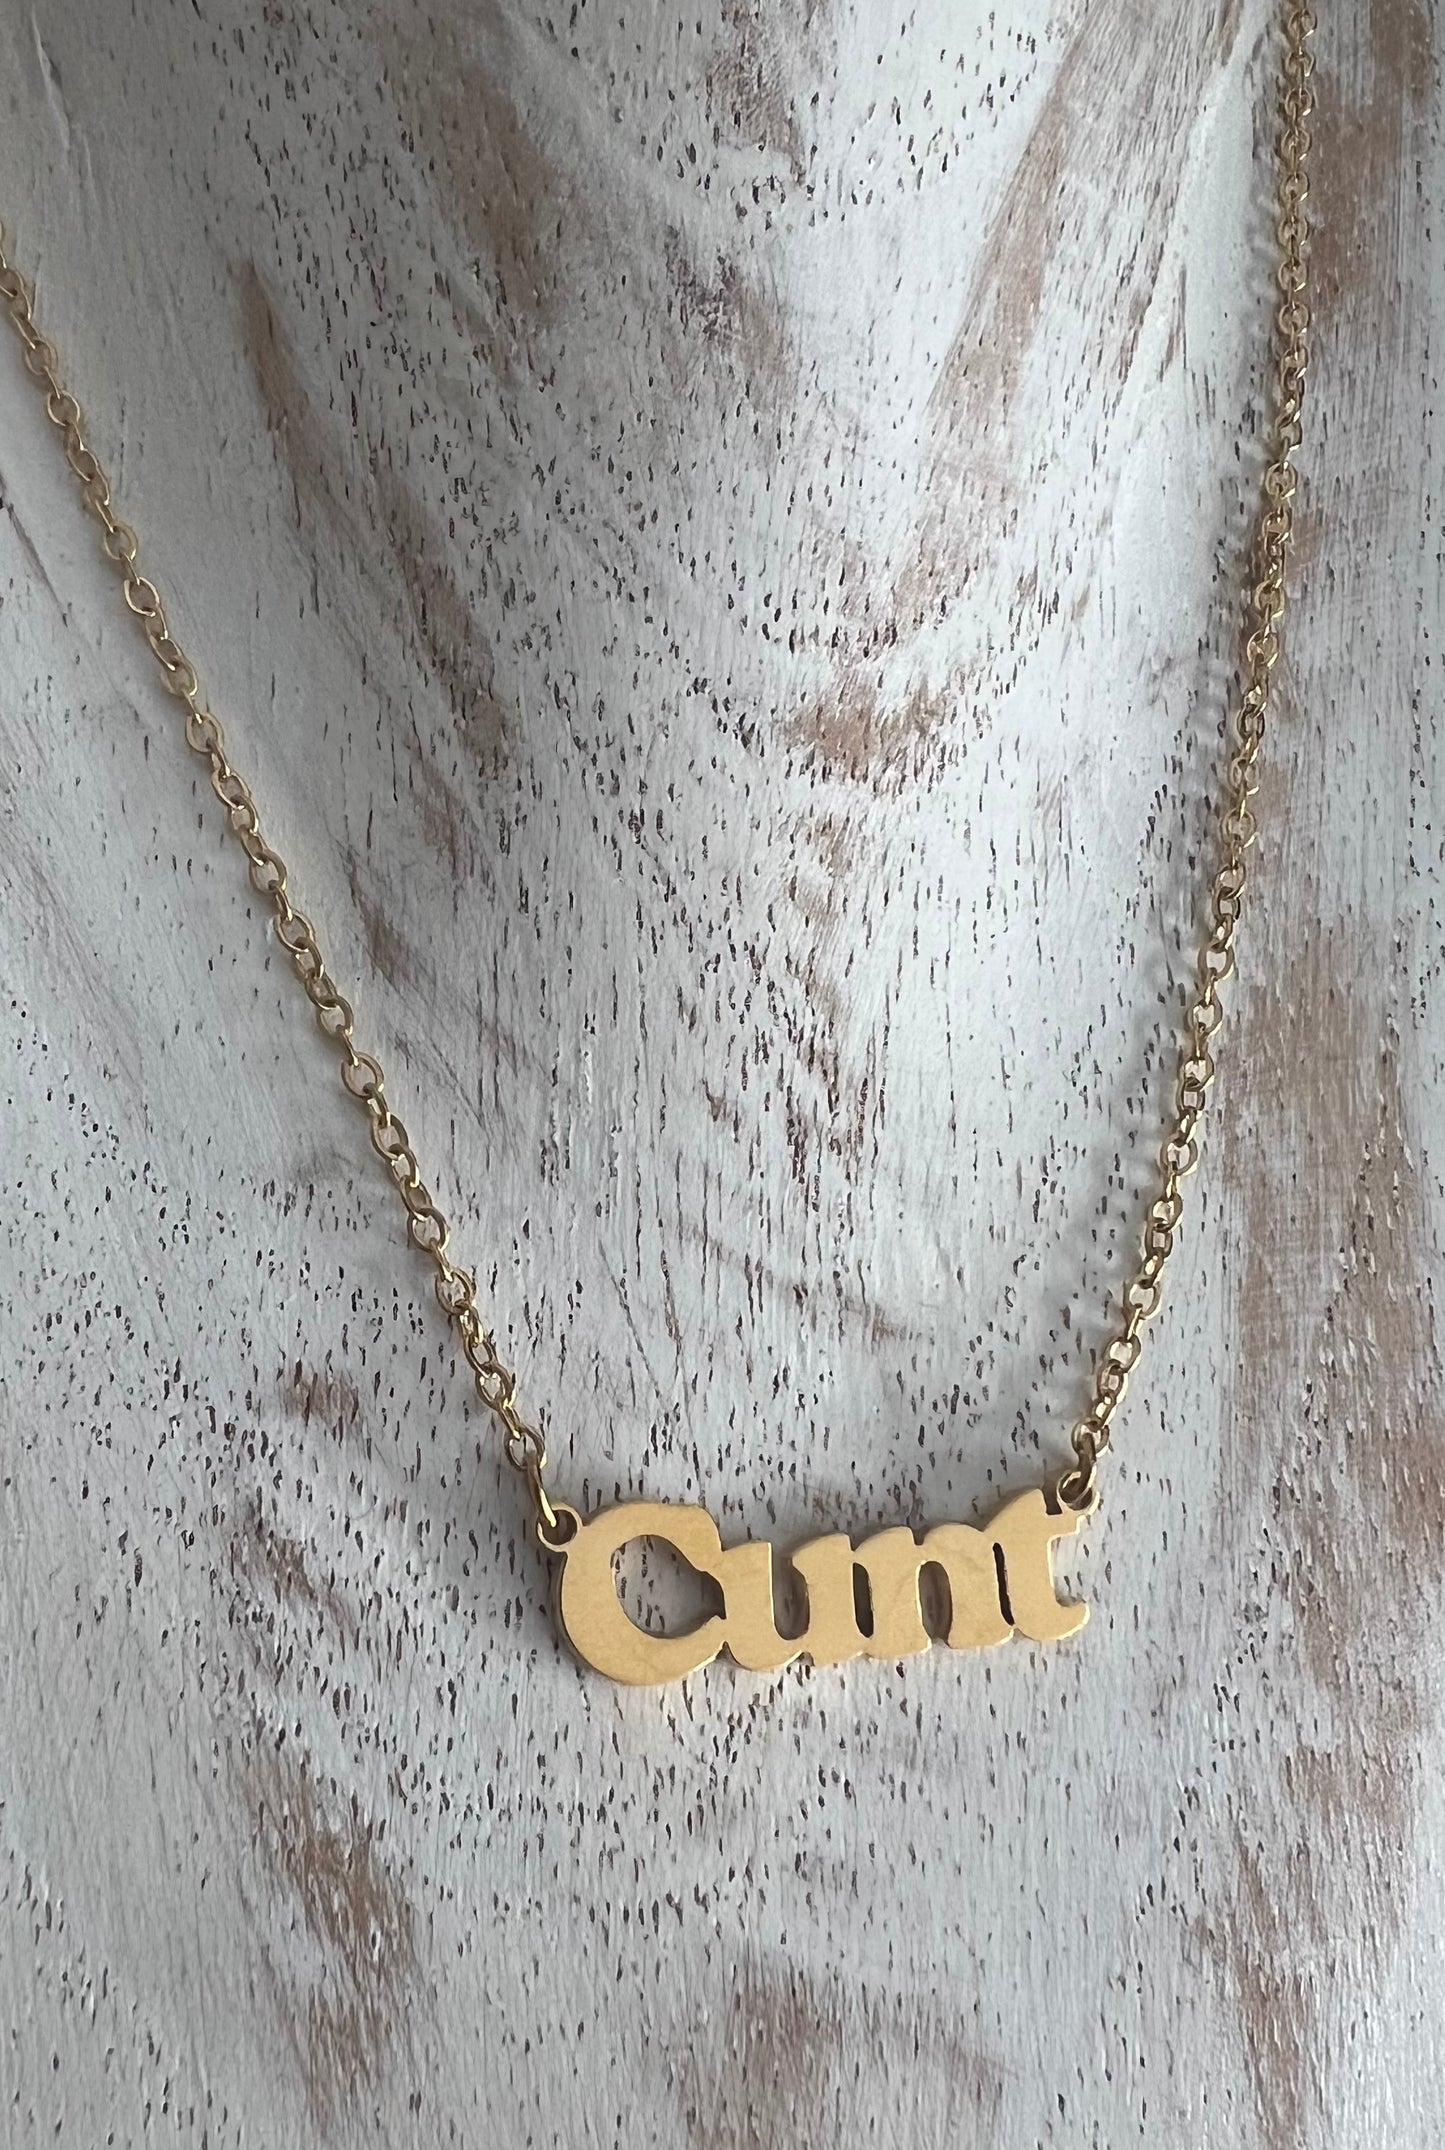 Cunt Necklace